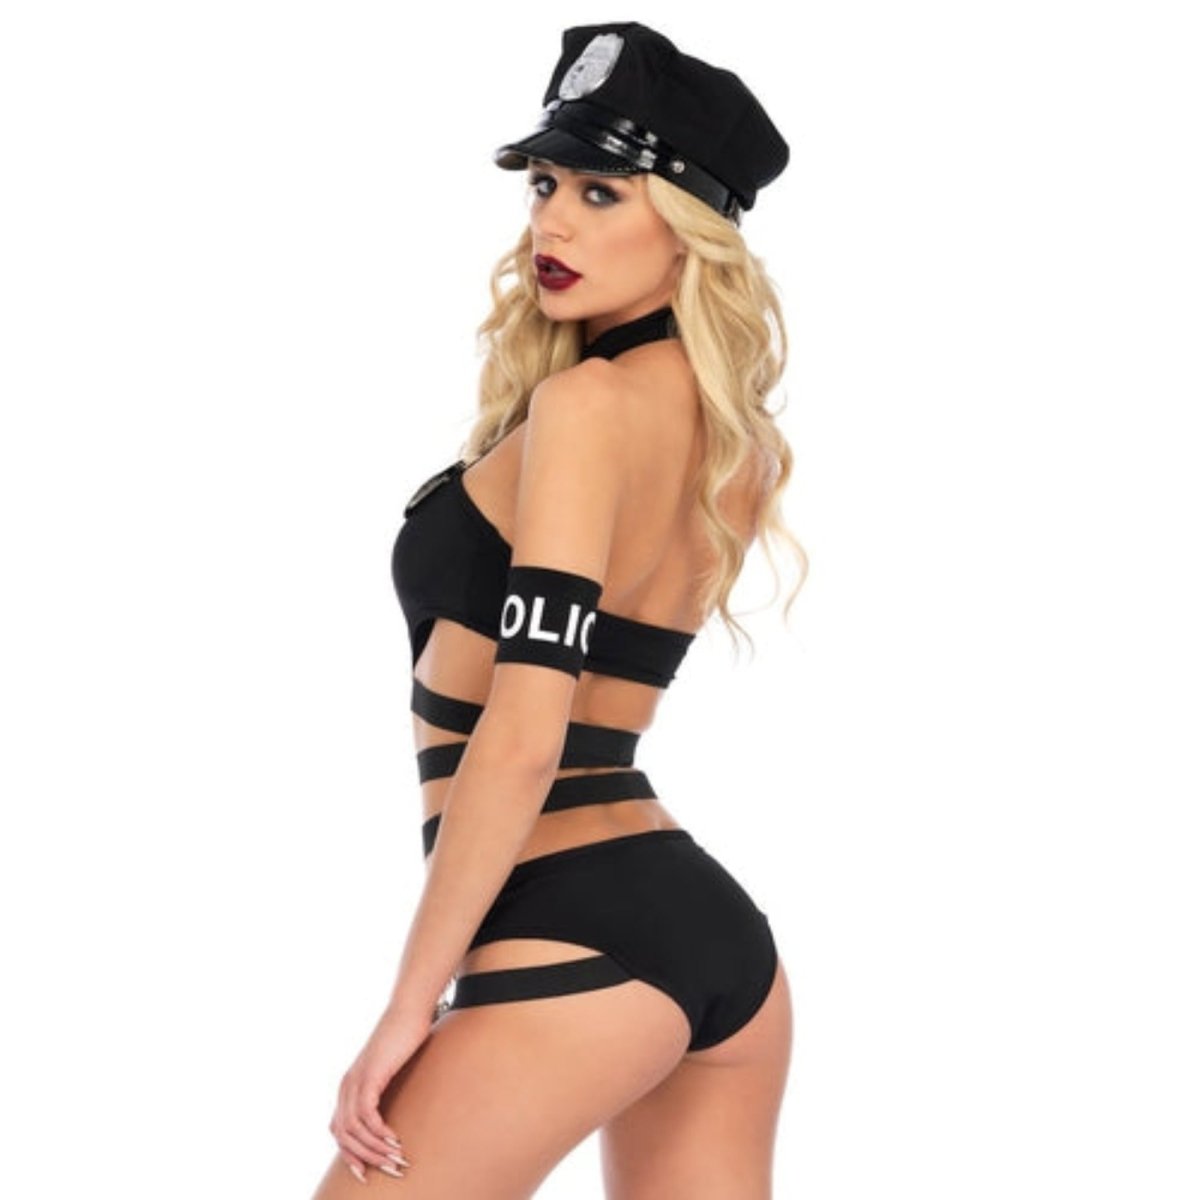 Undercover Cop Costume - worldclasscostumes